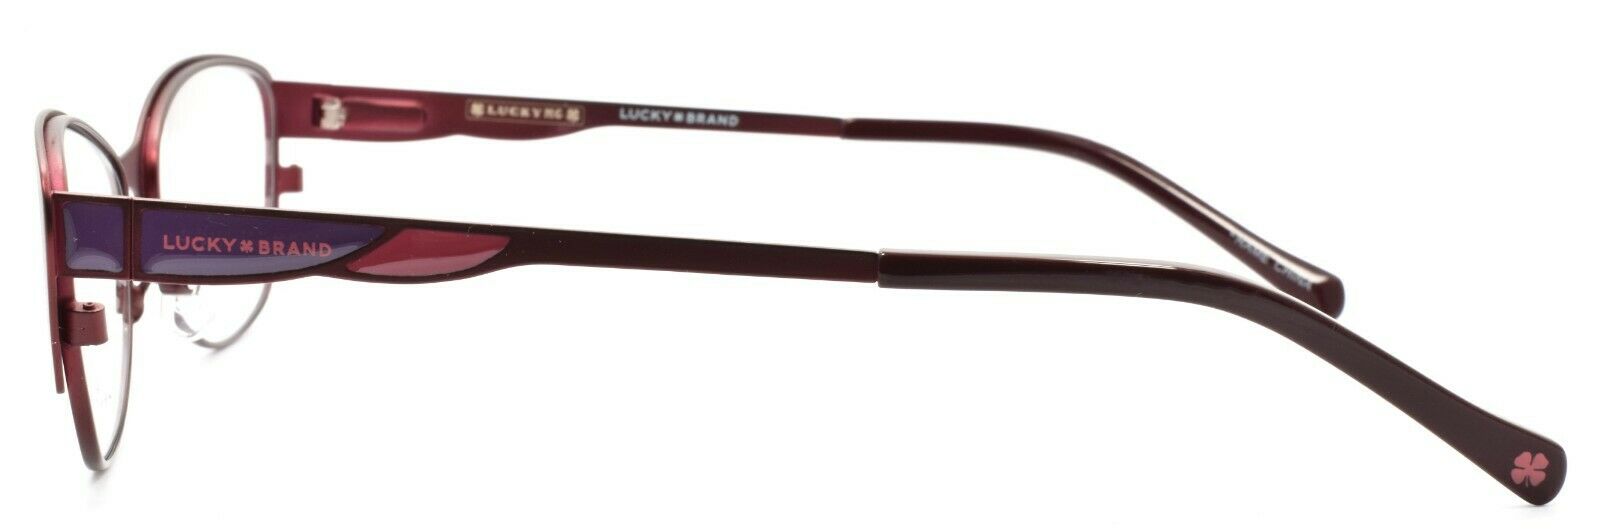 3-LUCKY BRAND D704 Women's Eyeglasses Frames 50-15-135 Burgundy + CASE-751286282252-IKSpecs